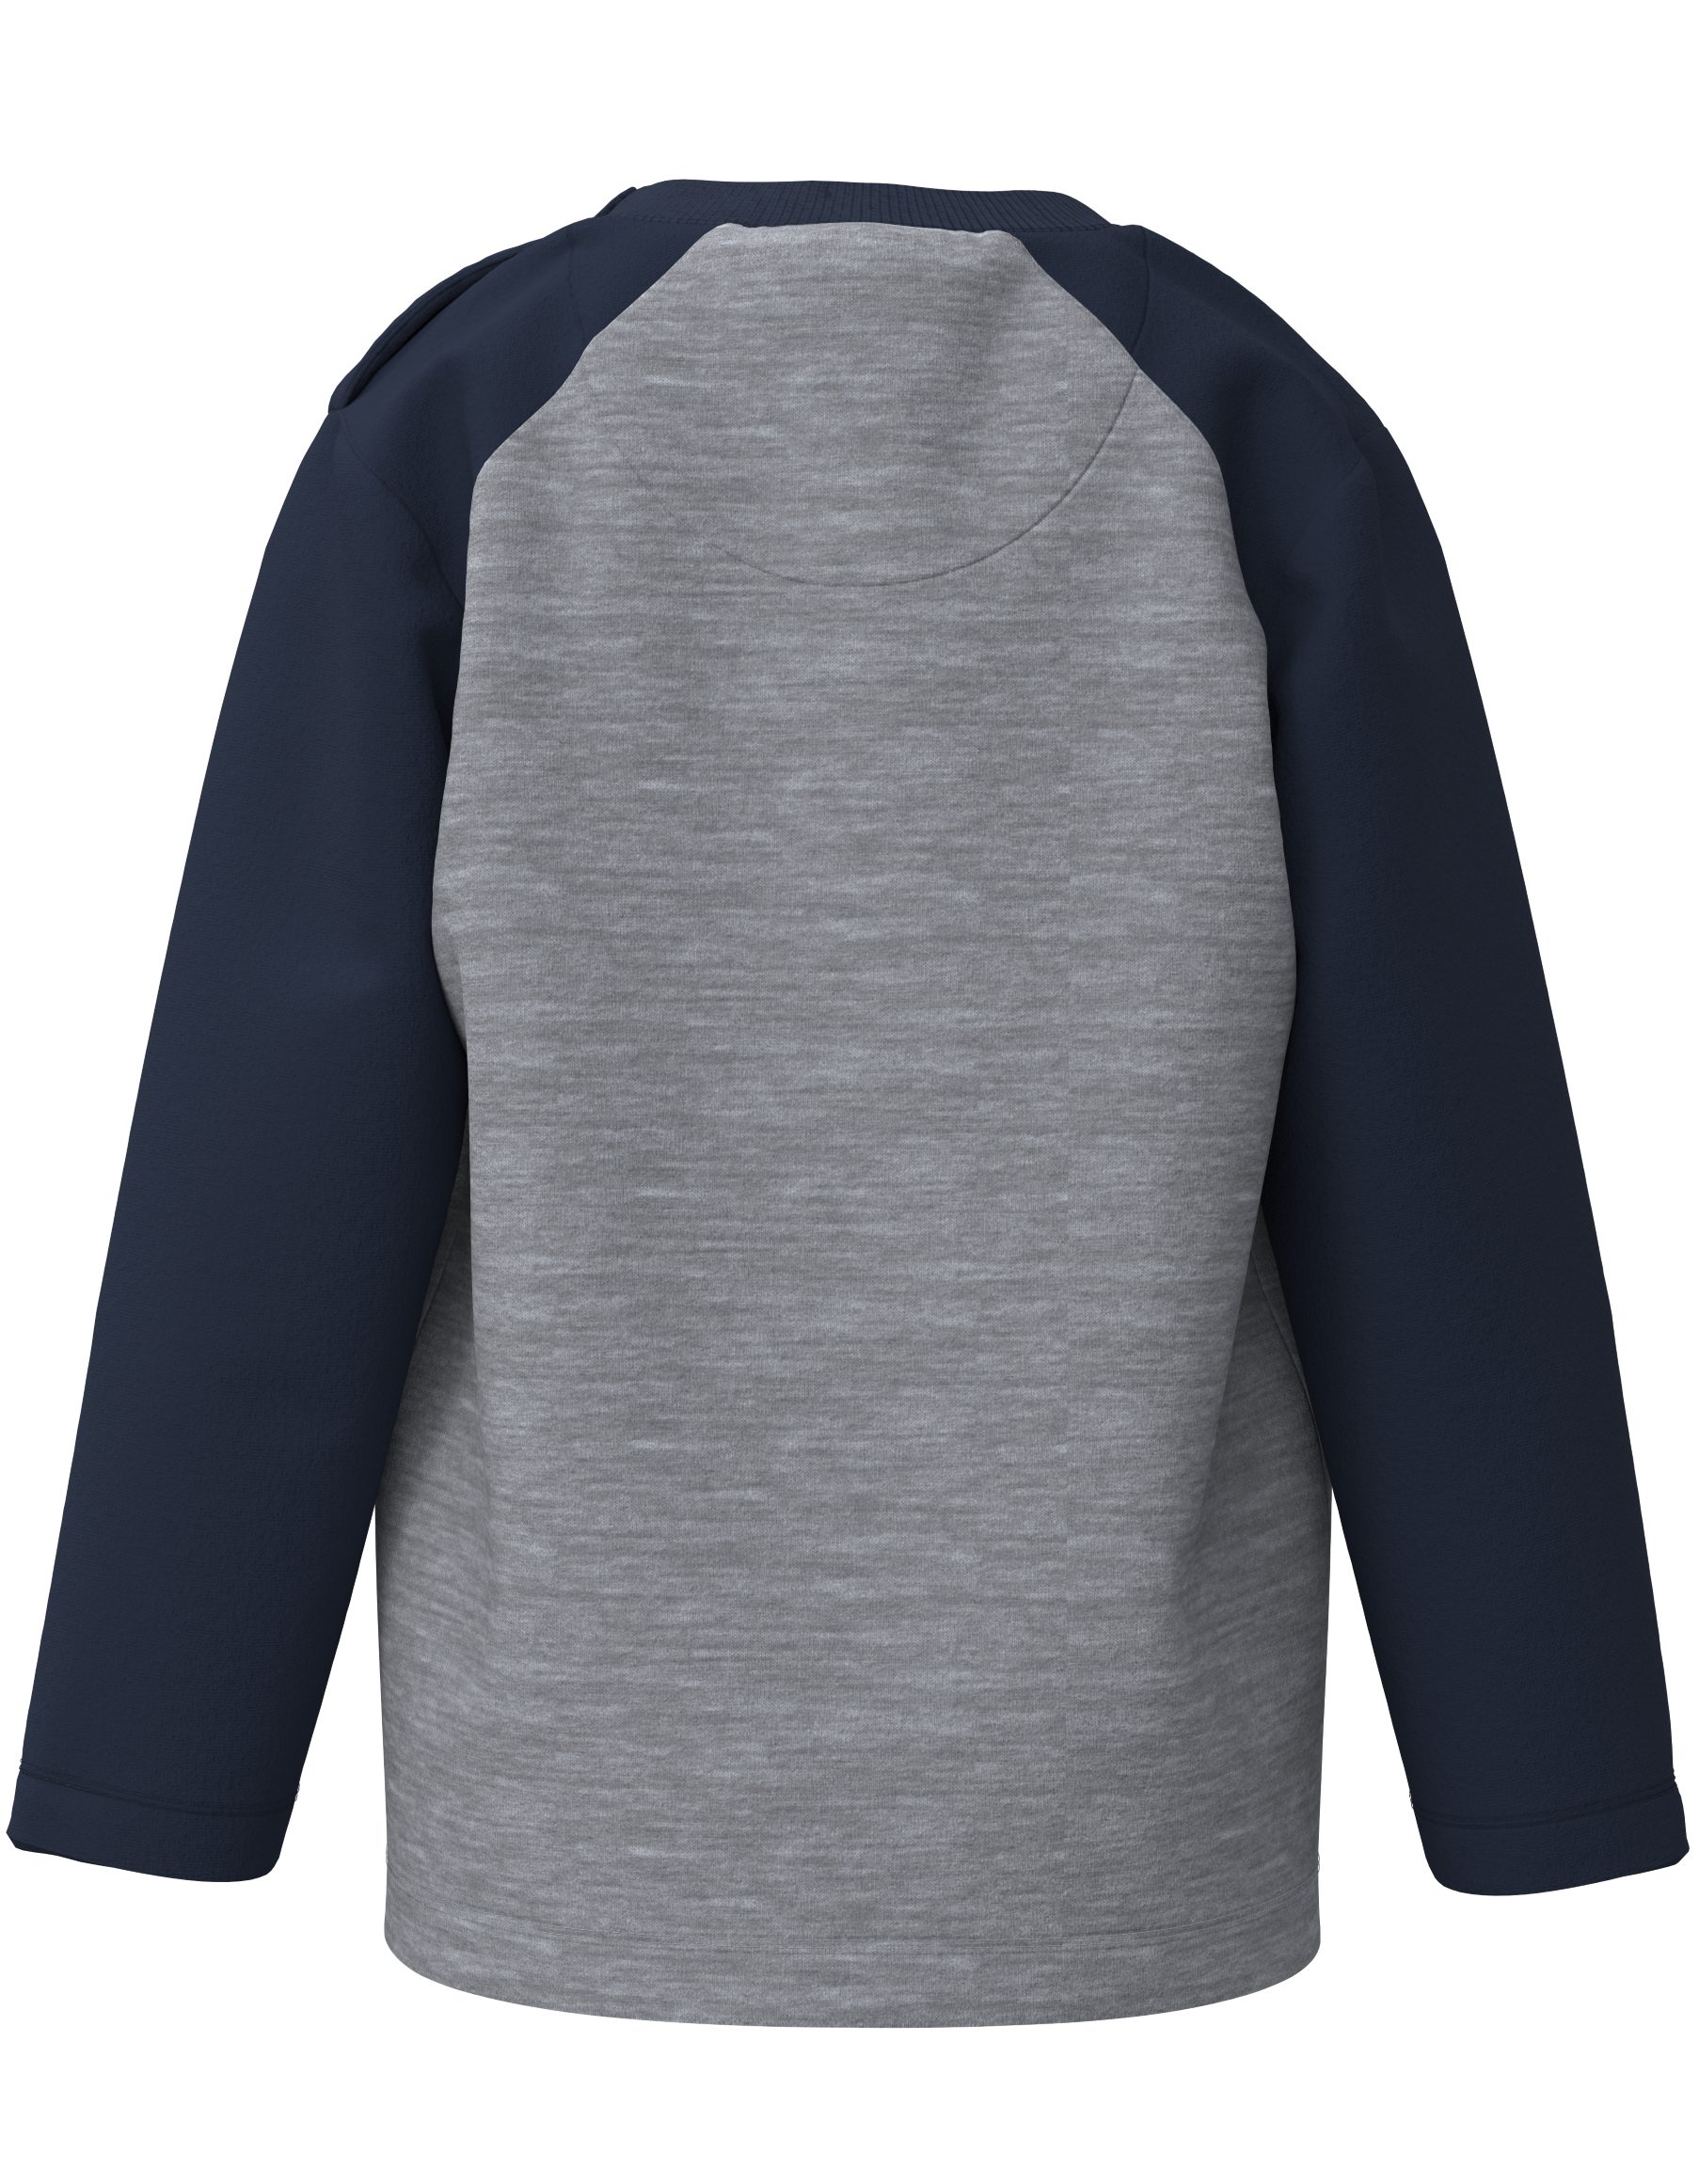 Bobo Siebenschläfer Langarmshirt grau % bedruckt, Bio-Baumwolle, 100 Raglan, kontrastfarbige melange/blau unisex Ärmel